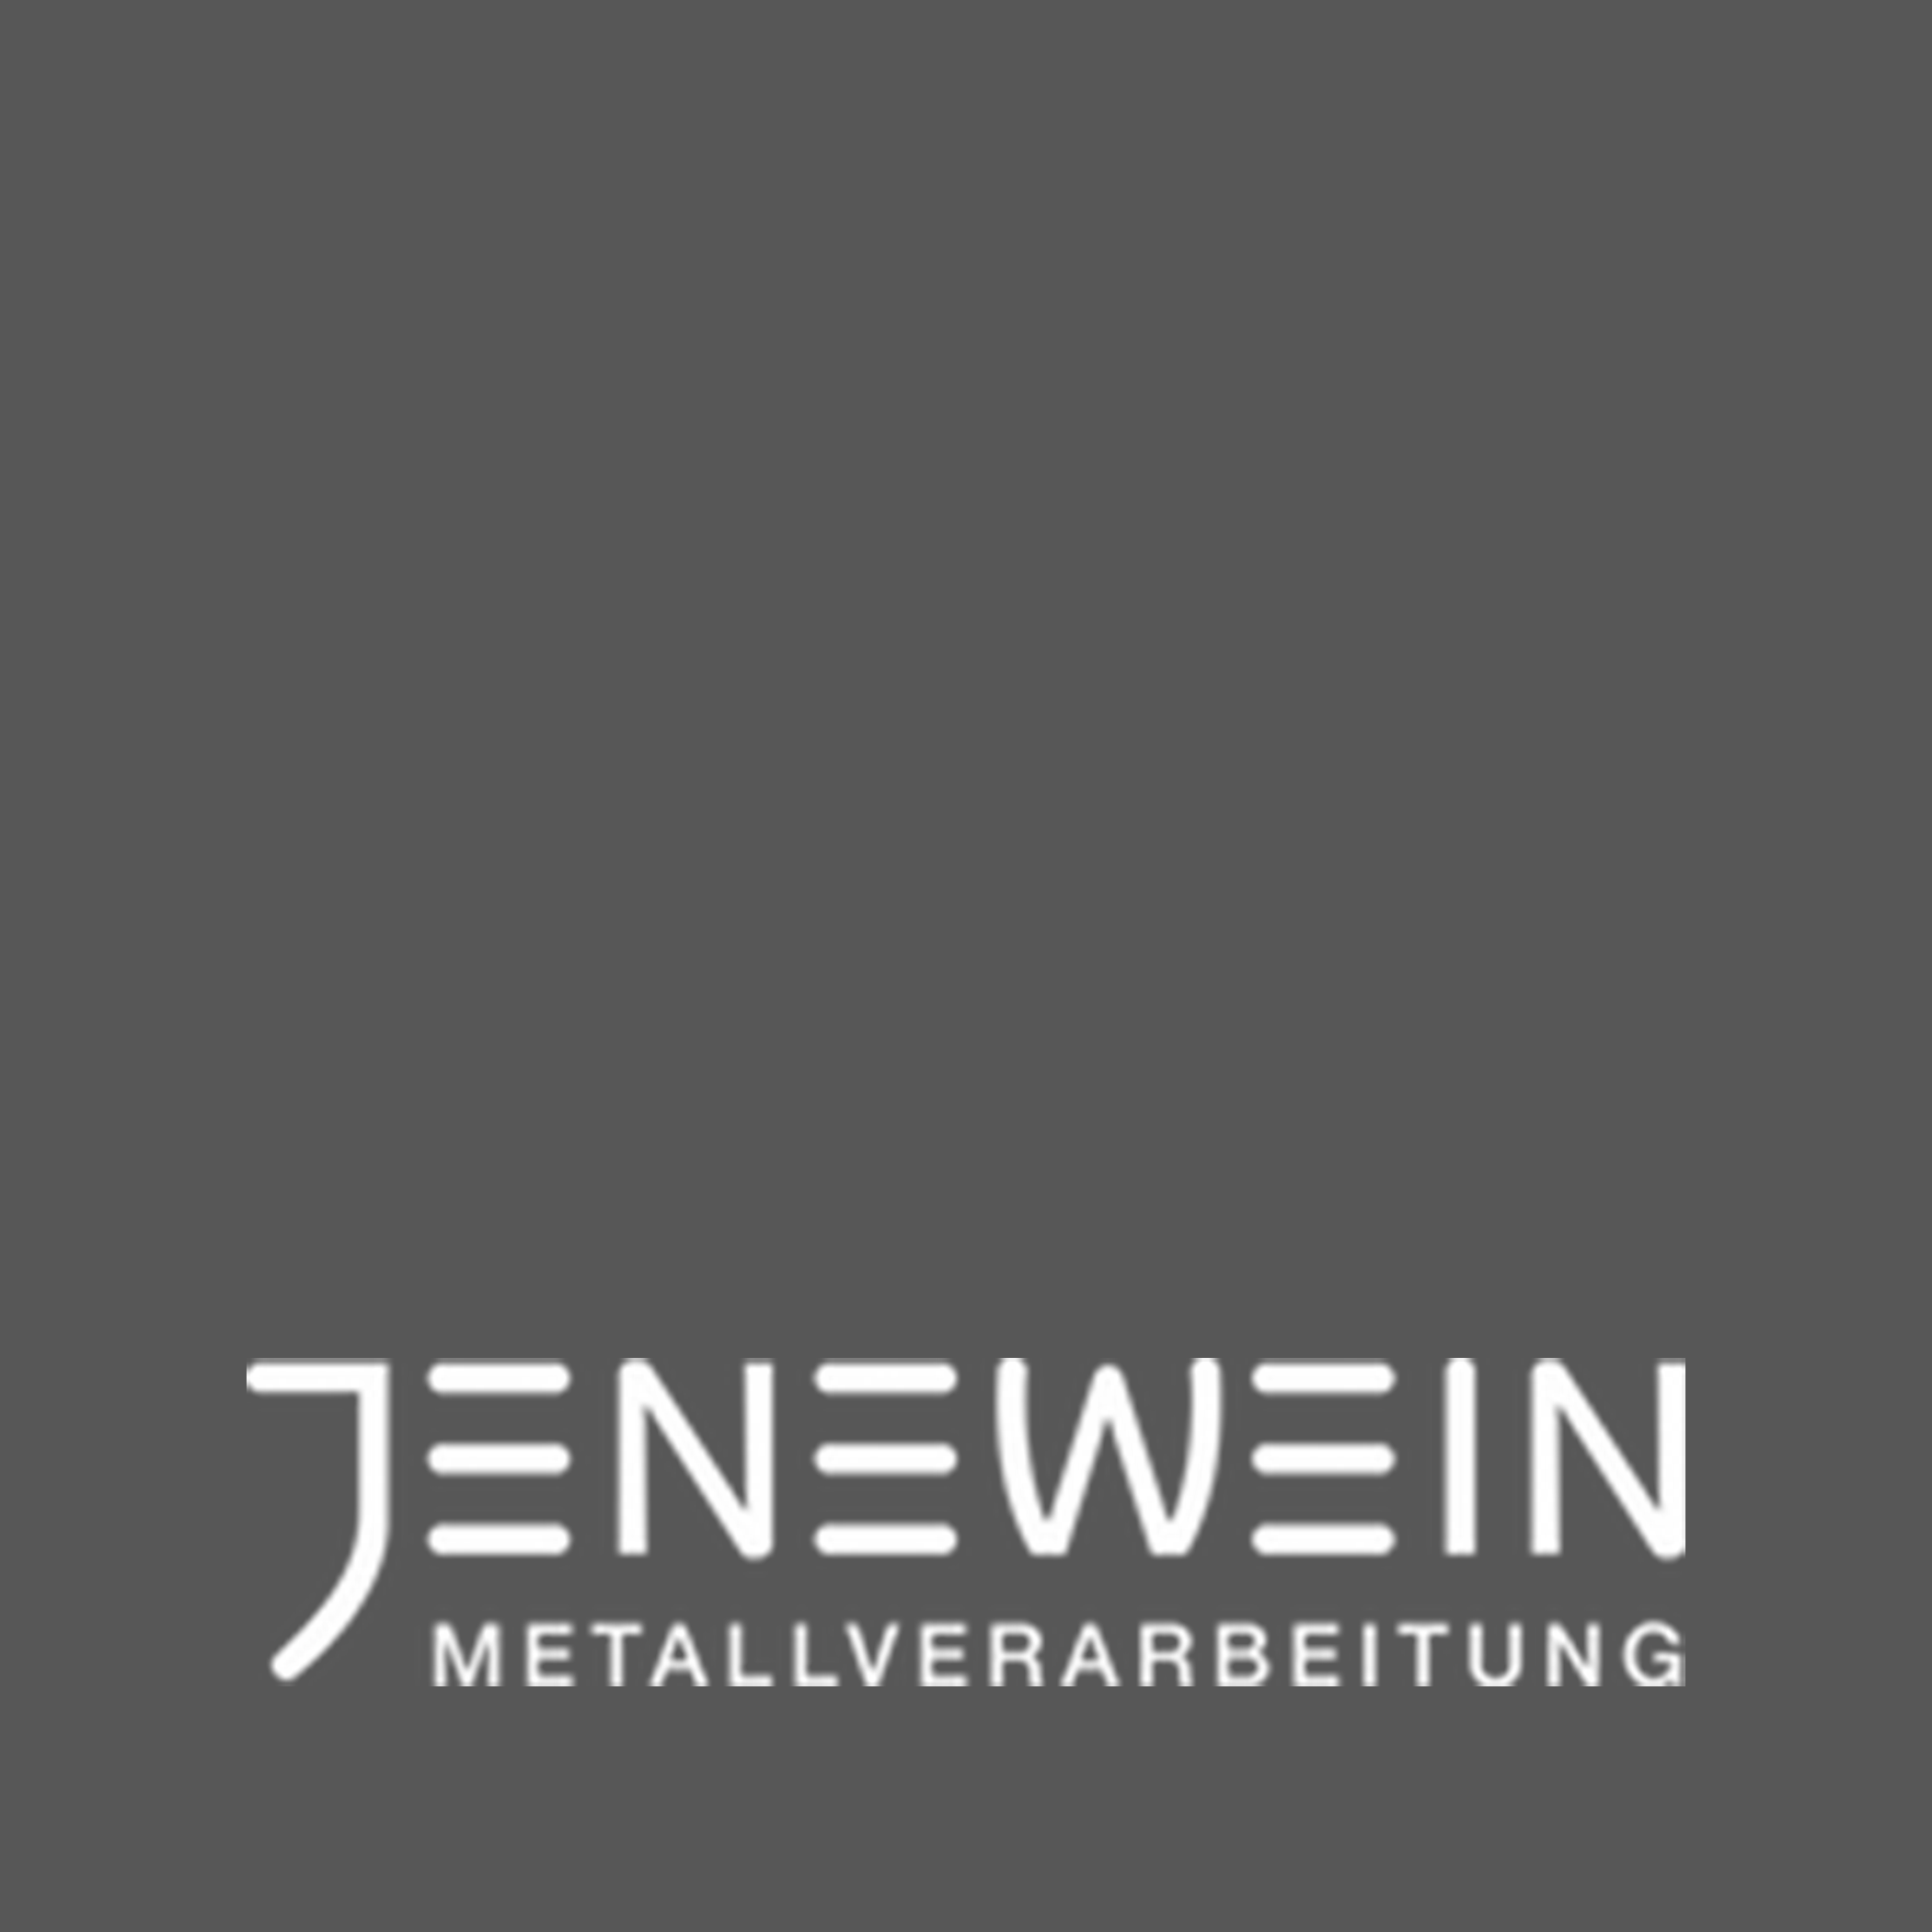 Metallverarbeitung in Tirol – Jenewein Metalltechnik